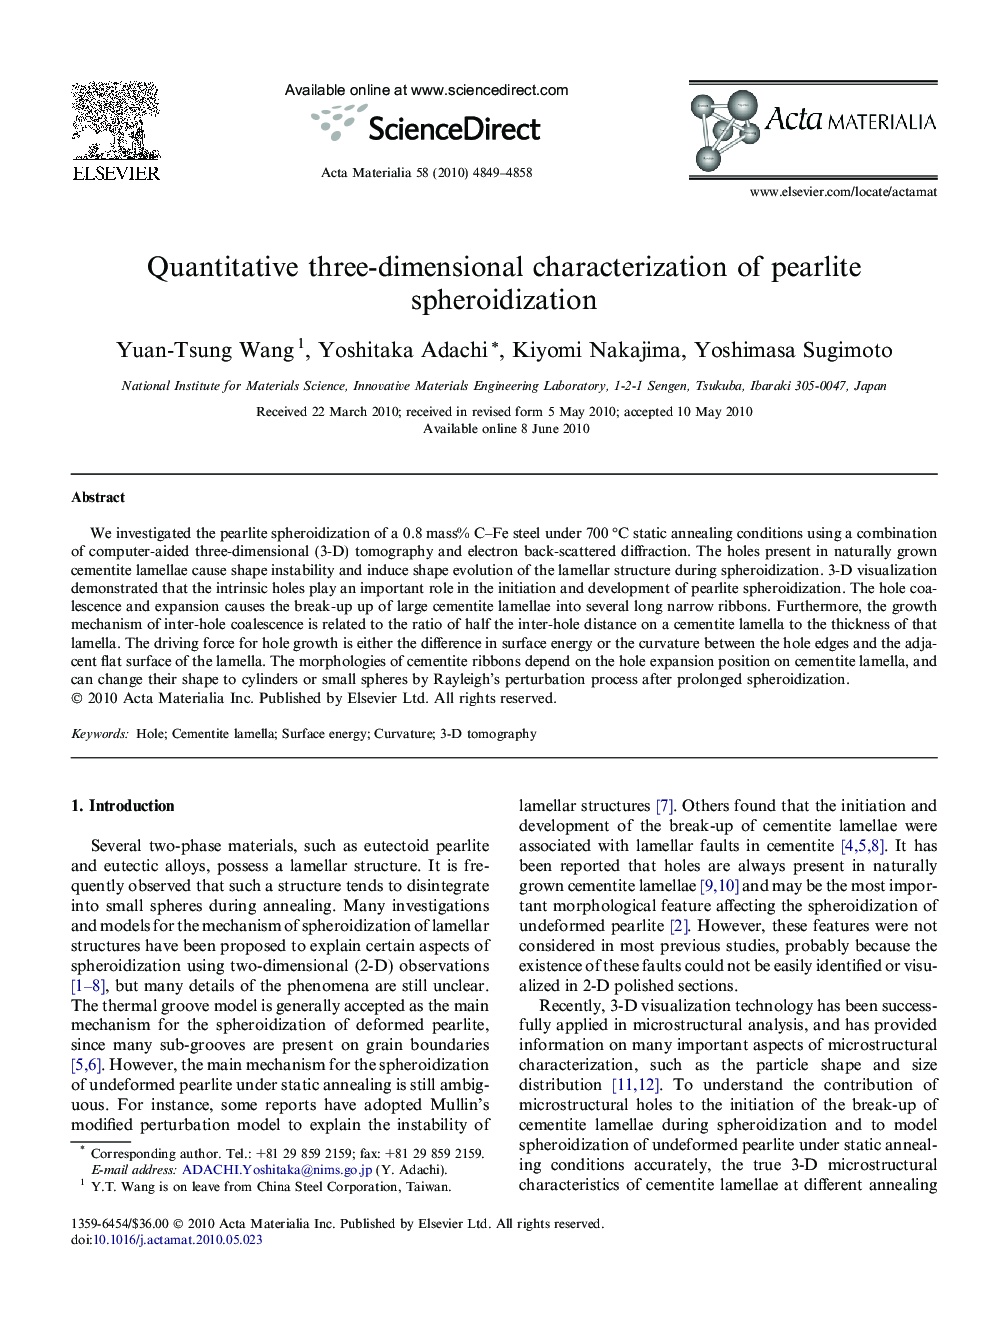 Quantitative three-dimensional characterization of pearlite spheroidization